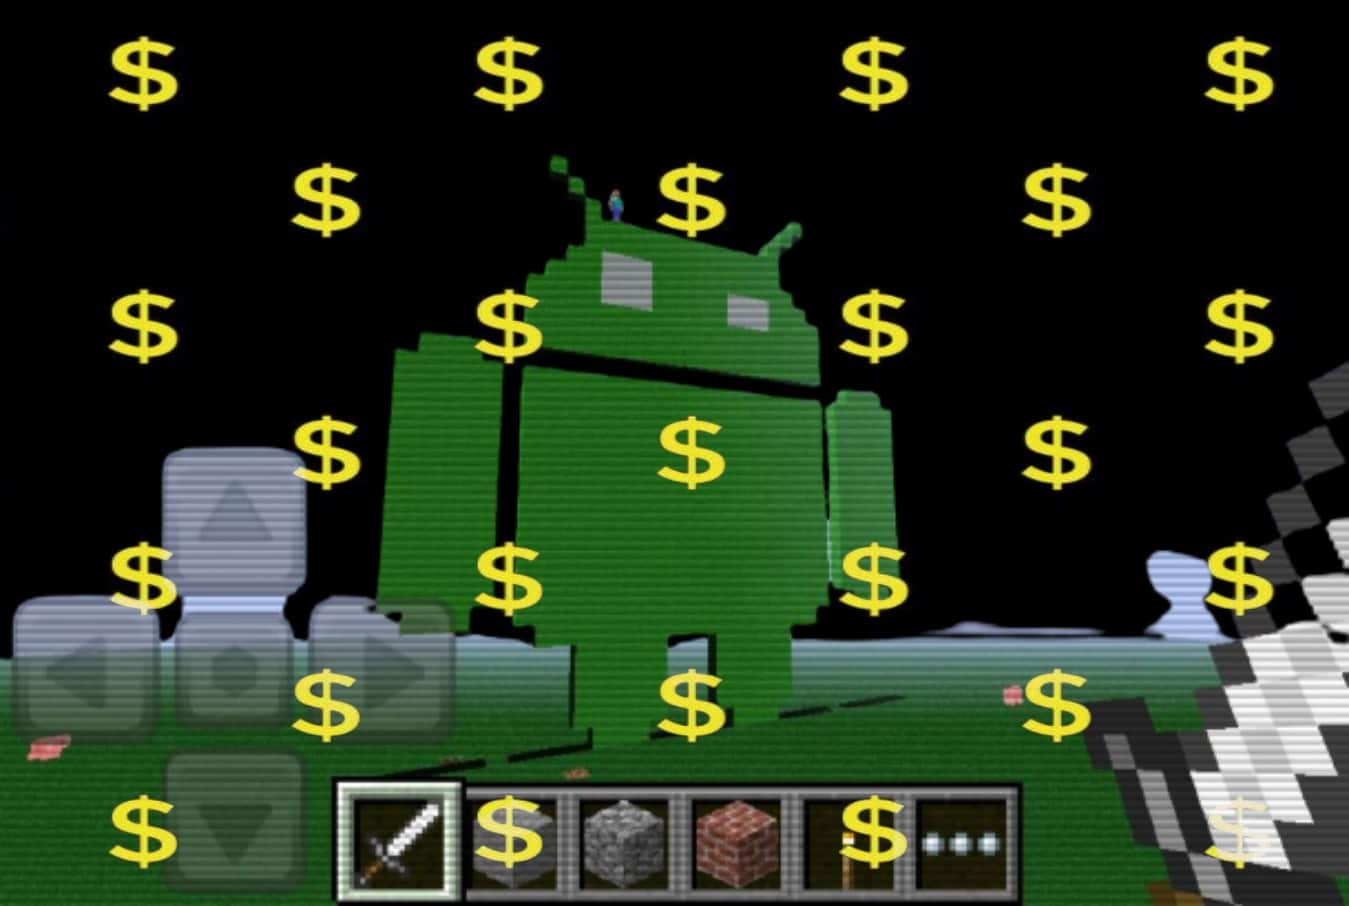 Minecraft - Apps on Google Play